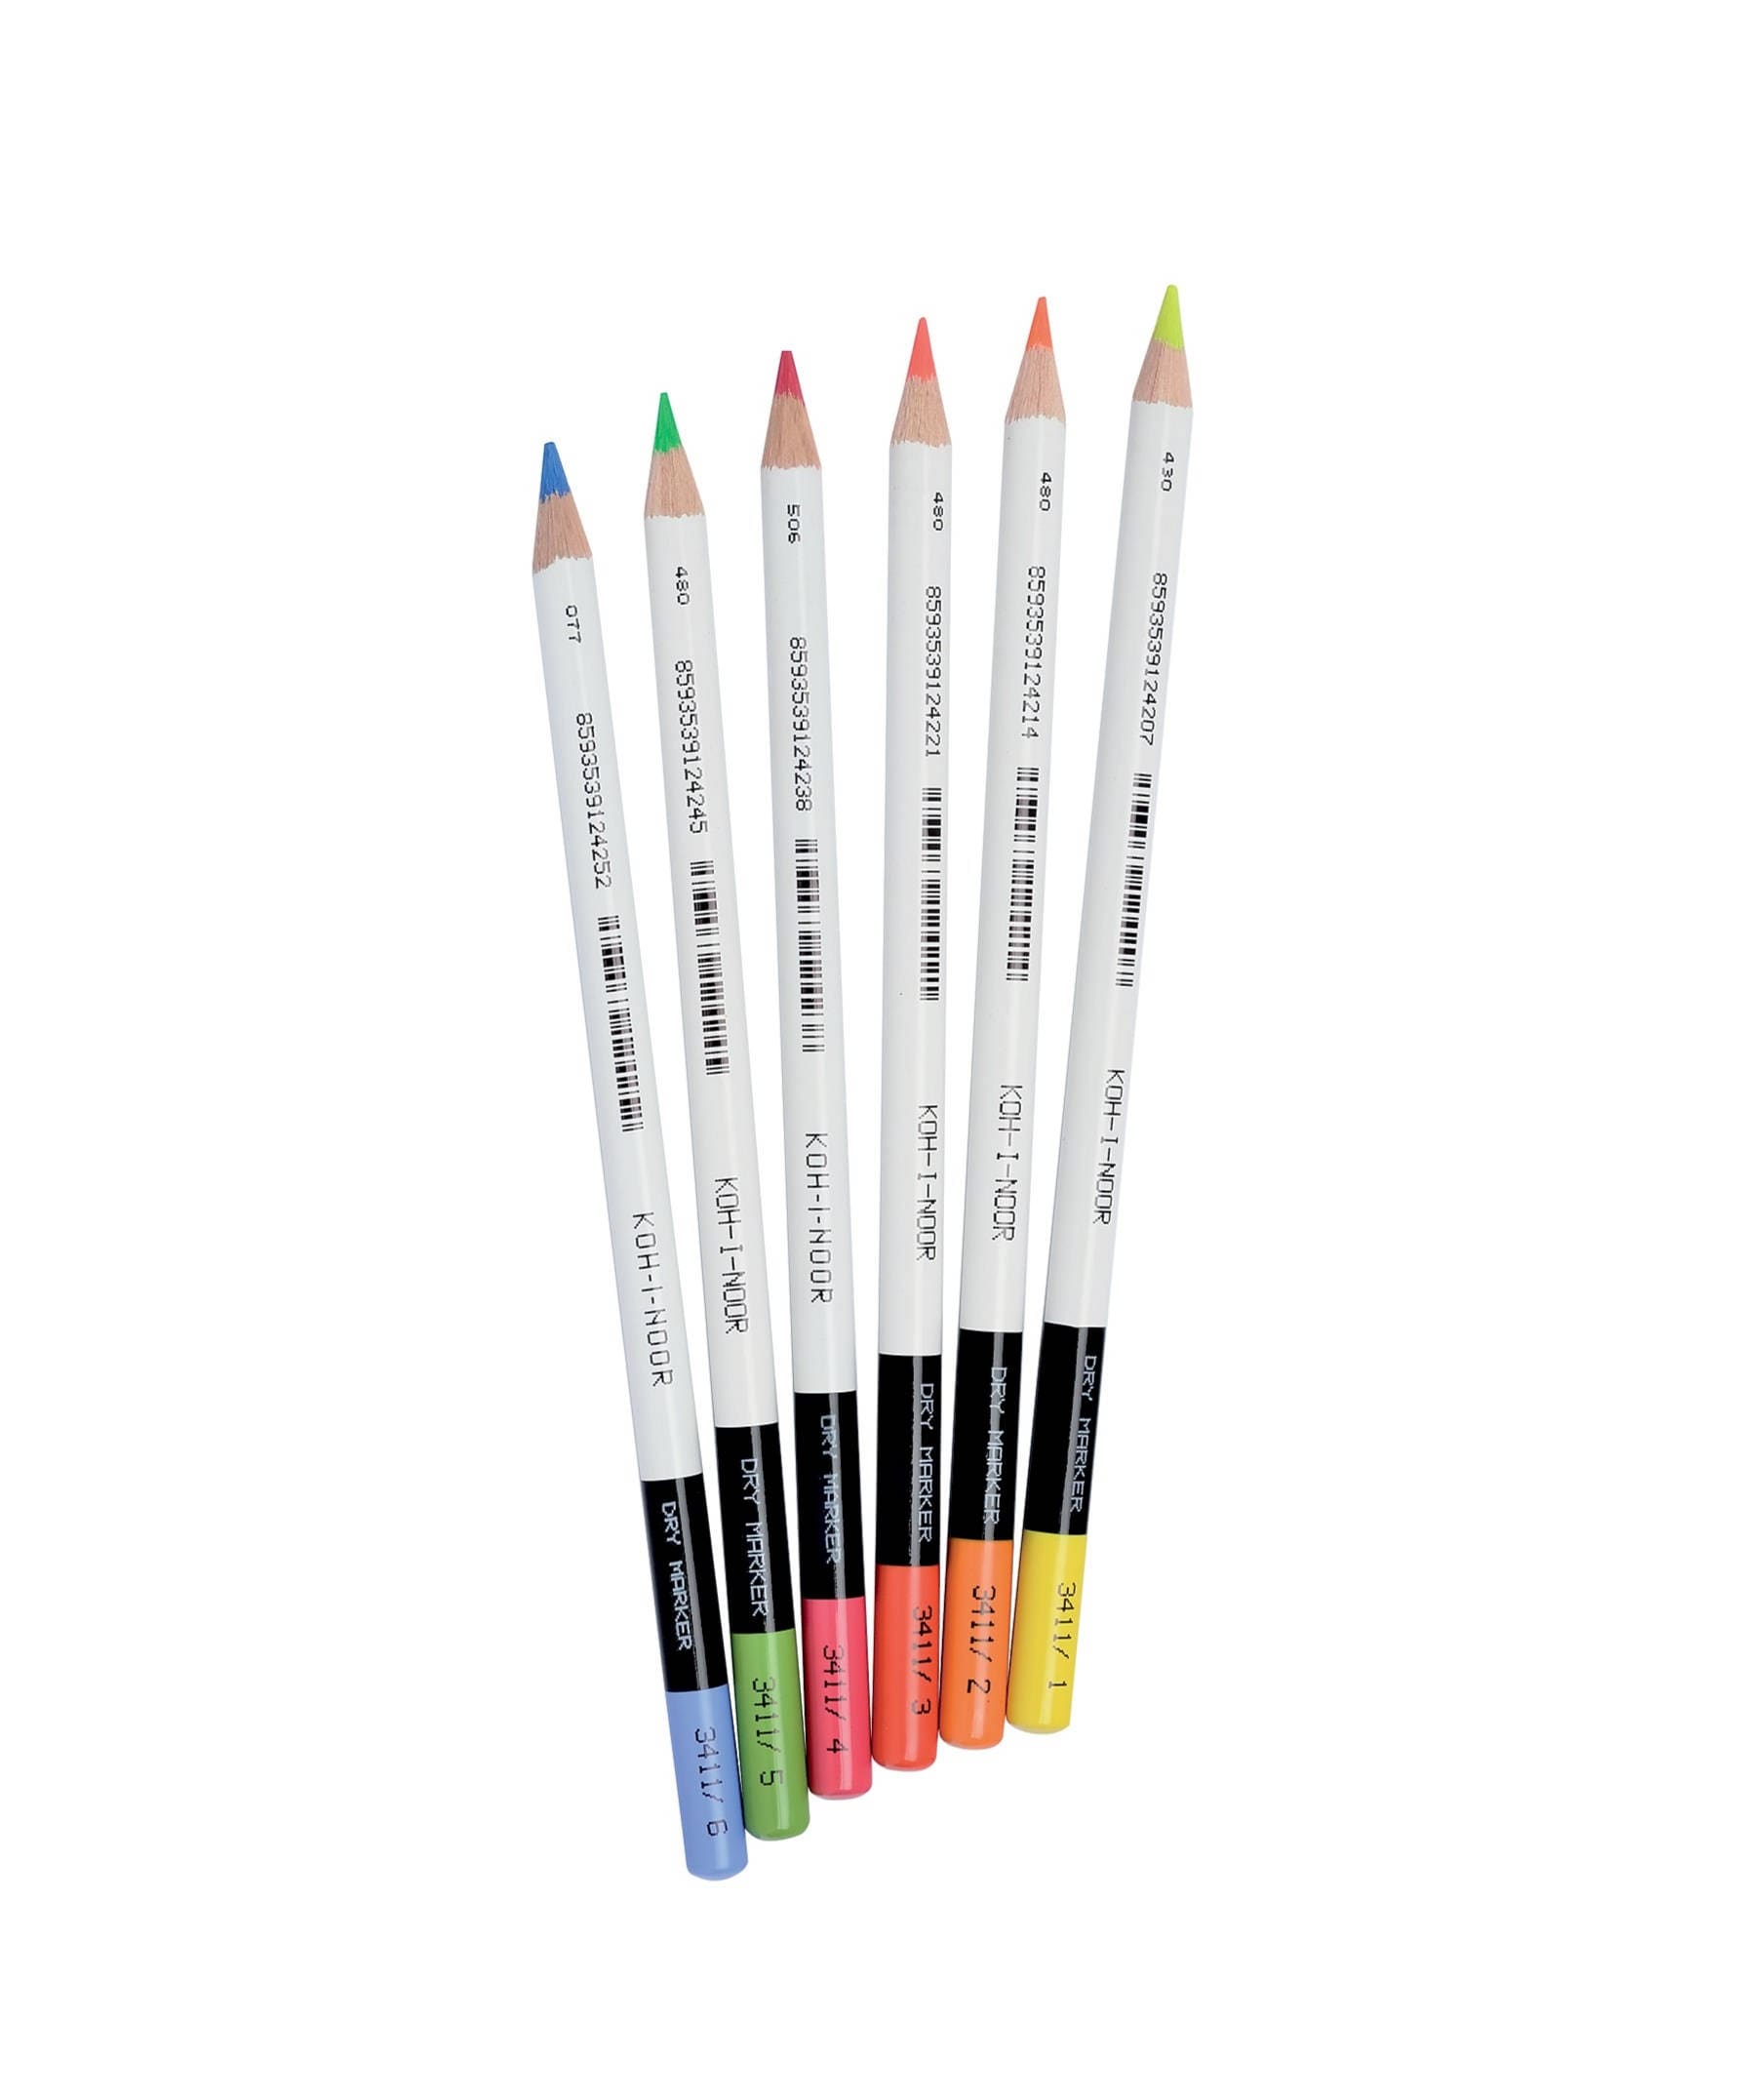 Multicolored Jumbo Pencils Set Koh-i-noor Magic 3408 Colored